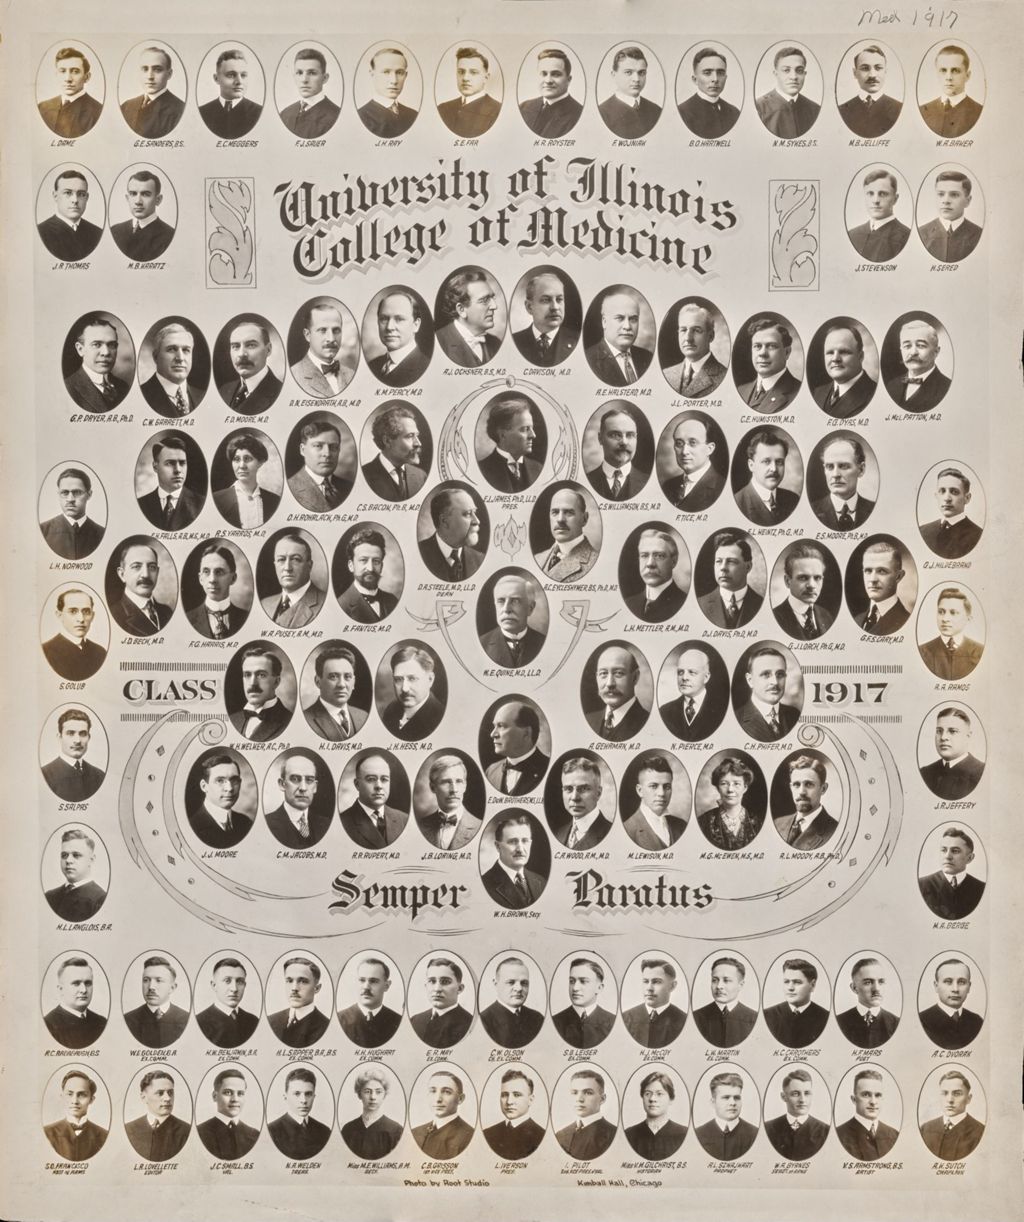 Miniature of 1917 graduating class, University of Illinois College of Medicine